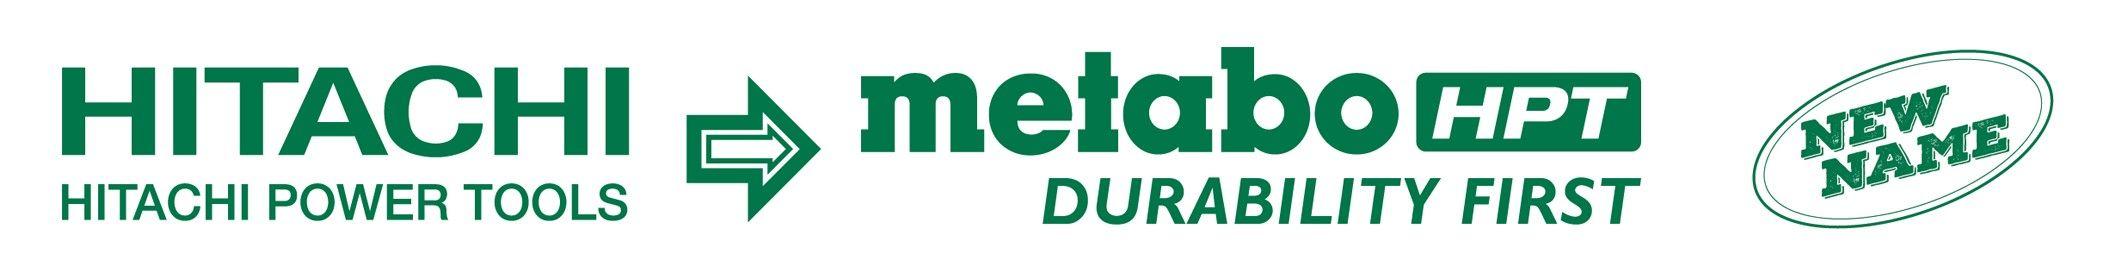 Metabo Logo - Metabo HPT - We Are Generation T